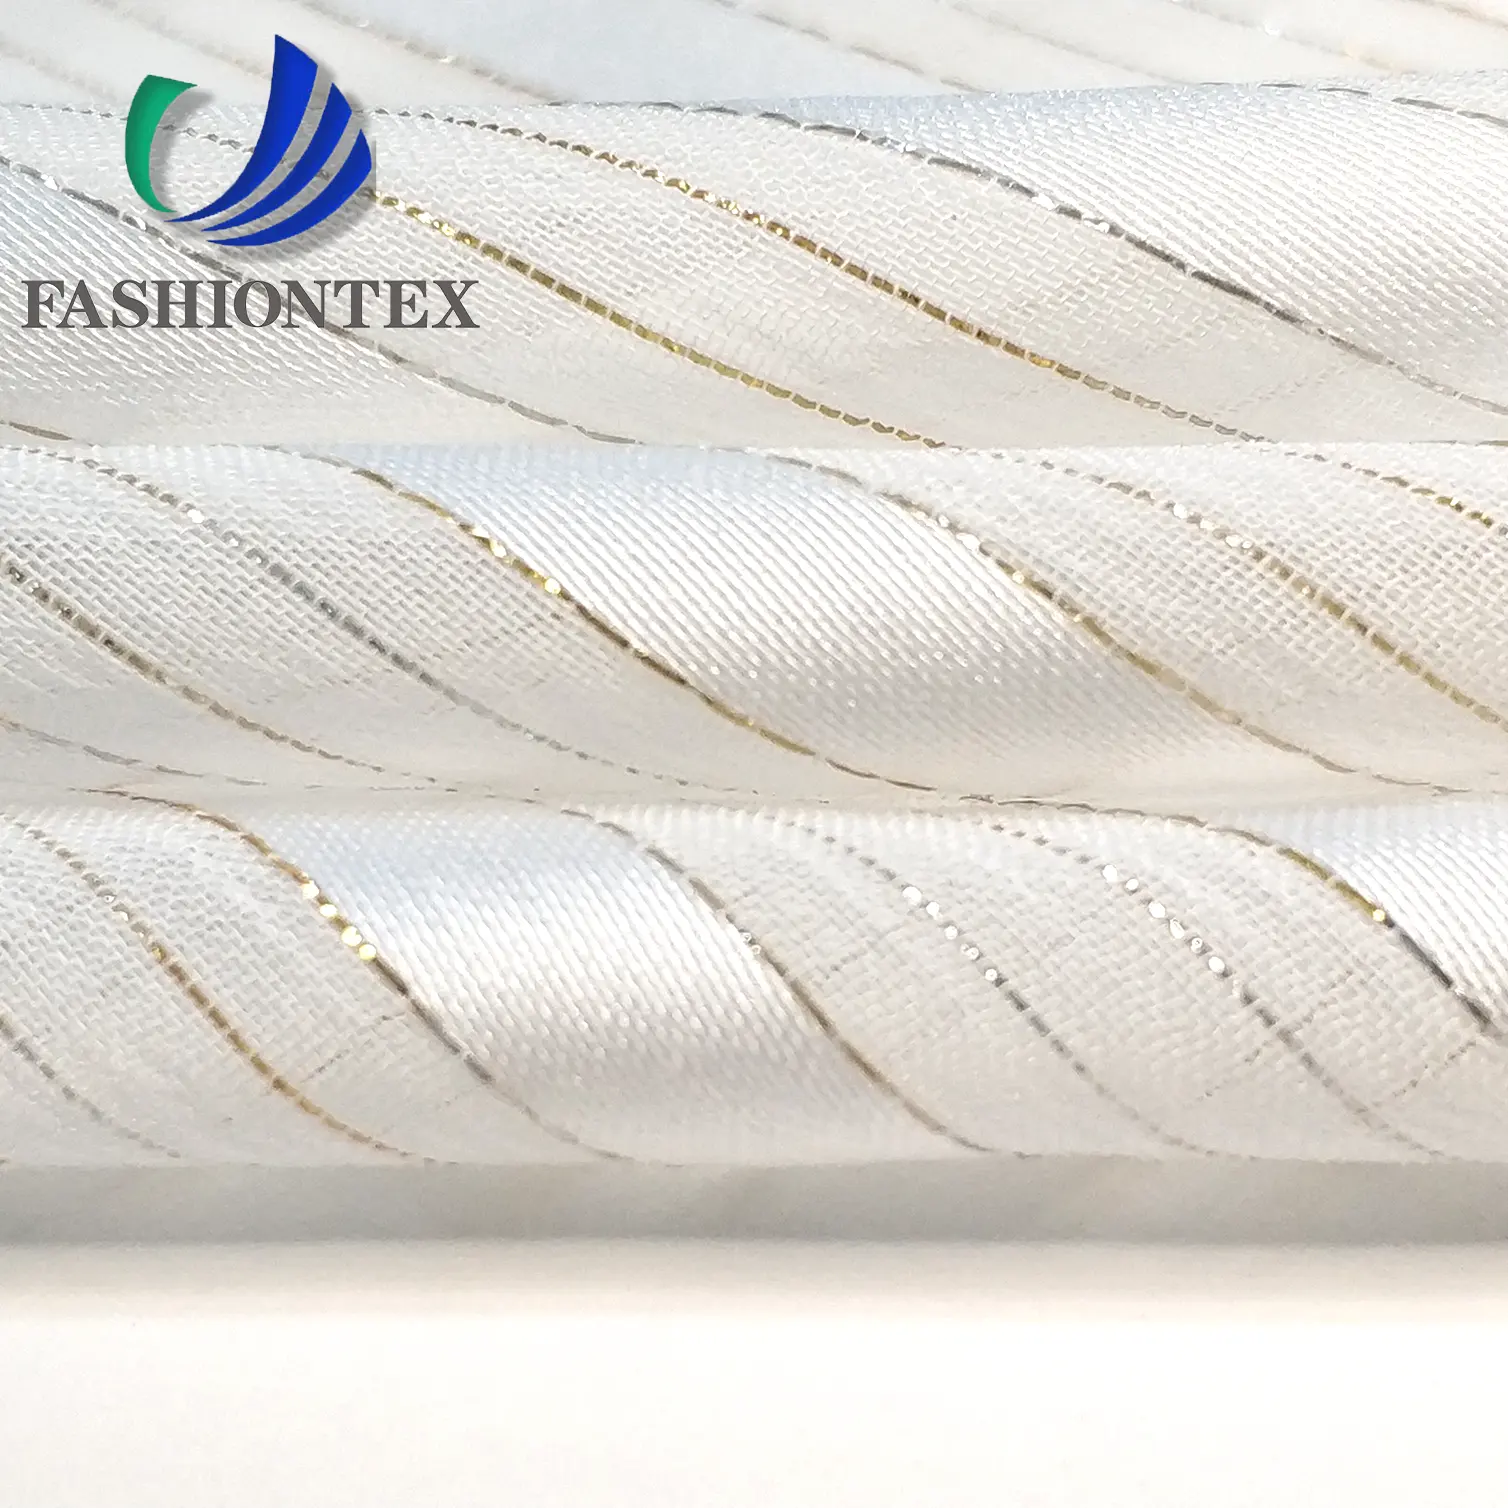 Fashiontex golden and silver white brocade shiny satin strip chiffon 100% polyester lurex woven jacquard satin fabric